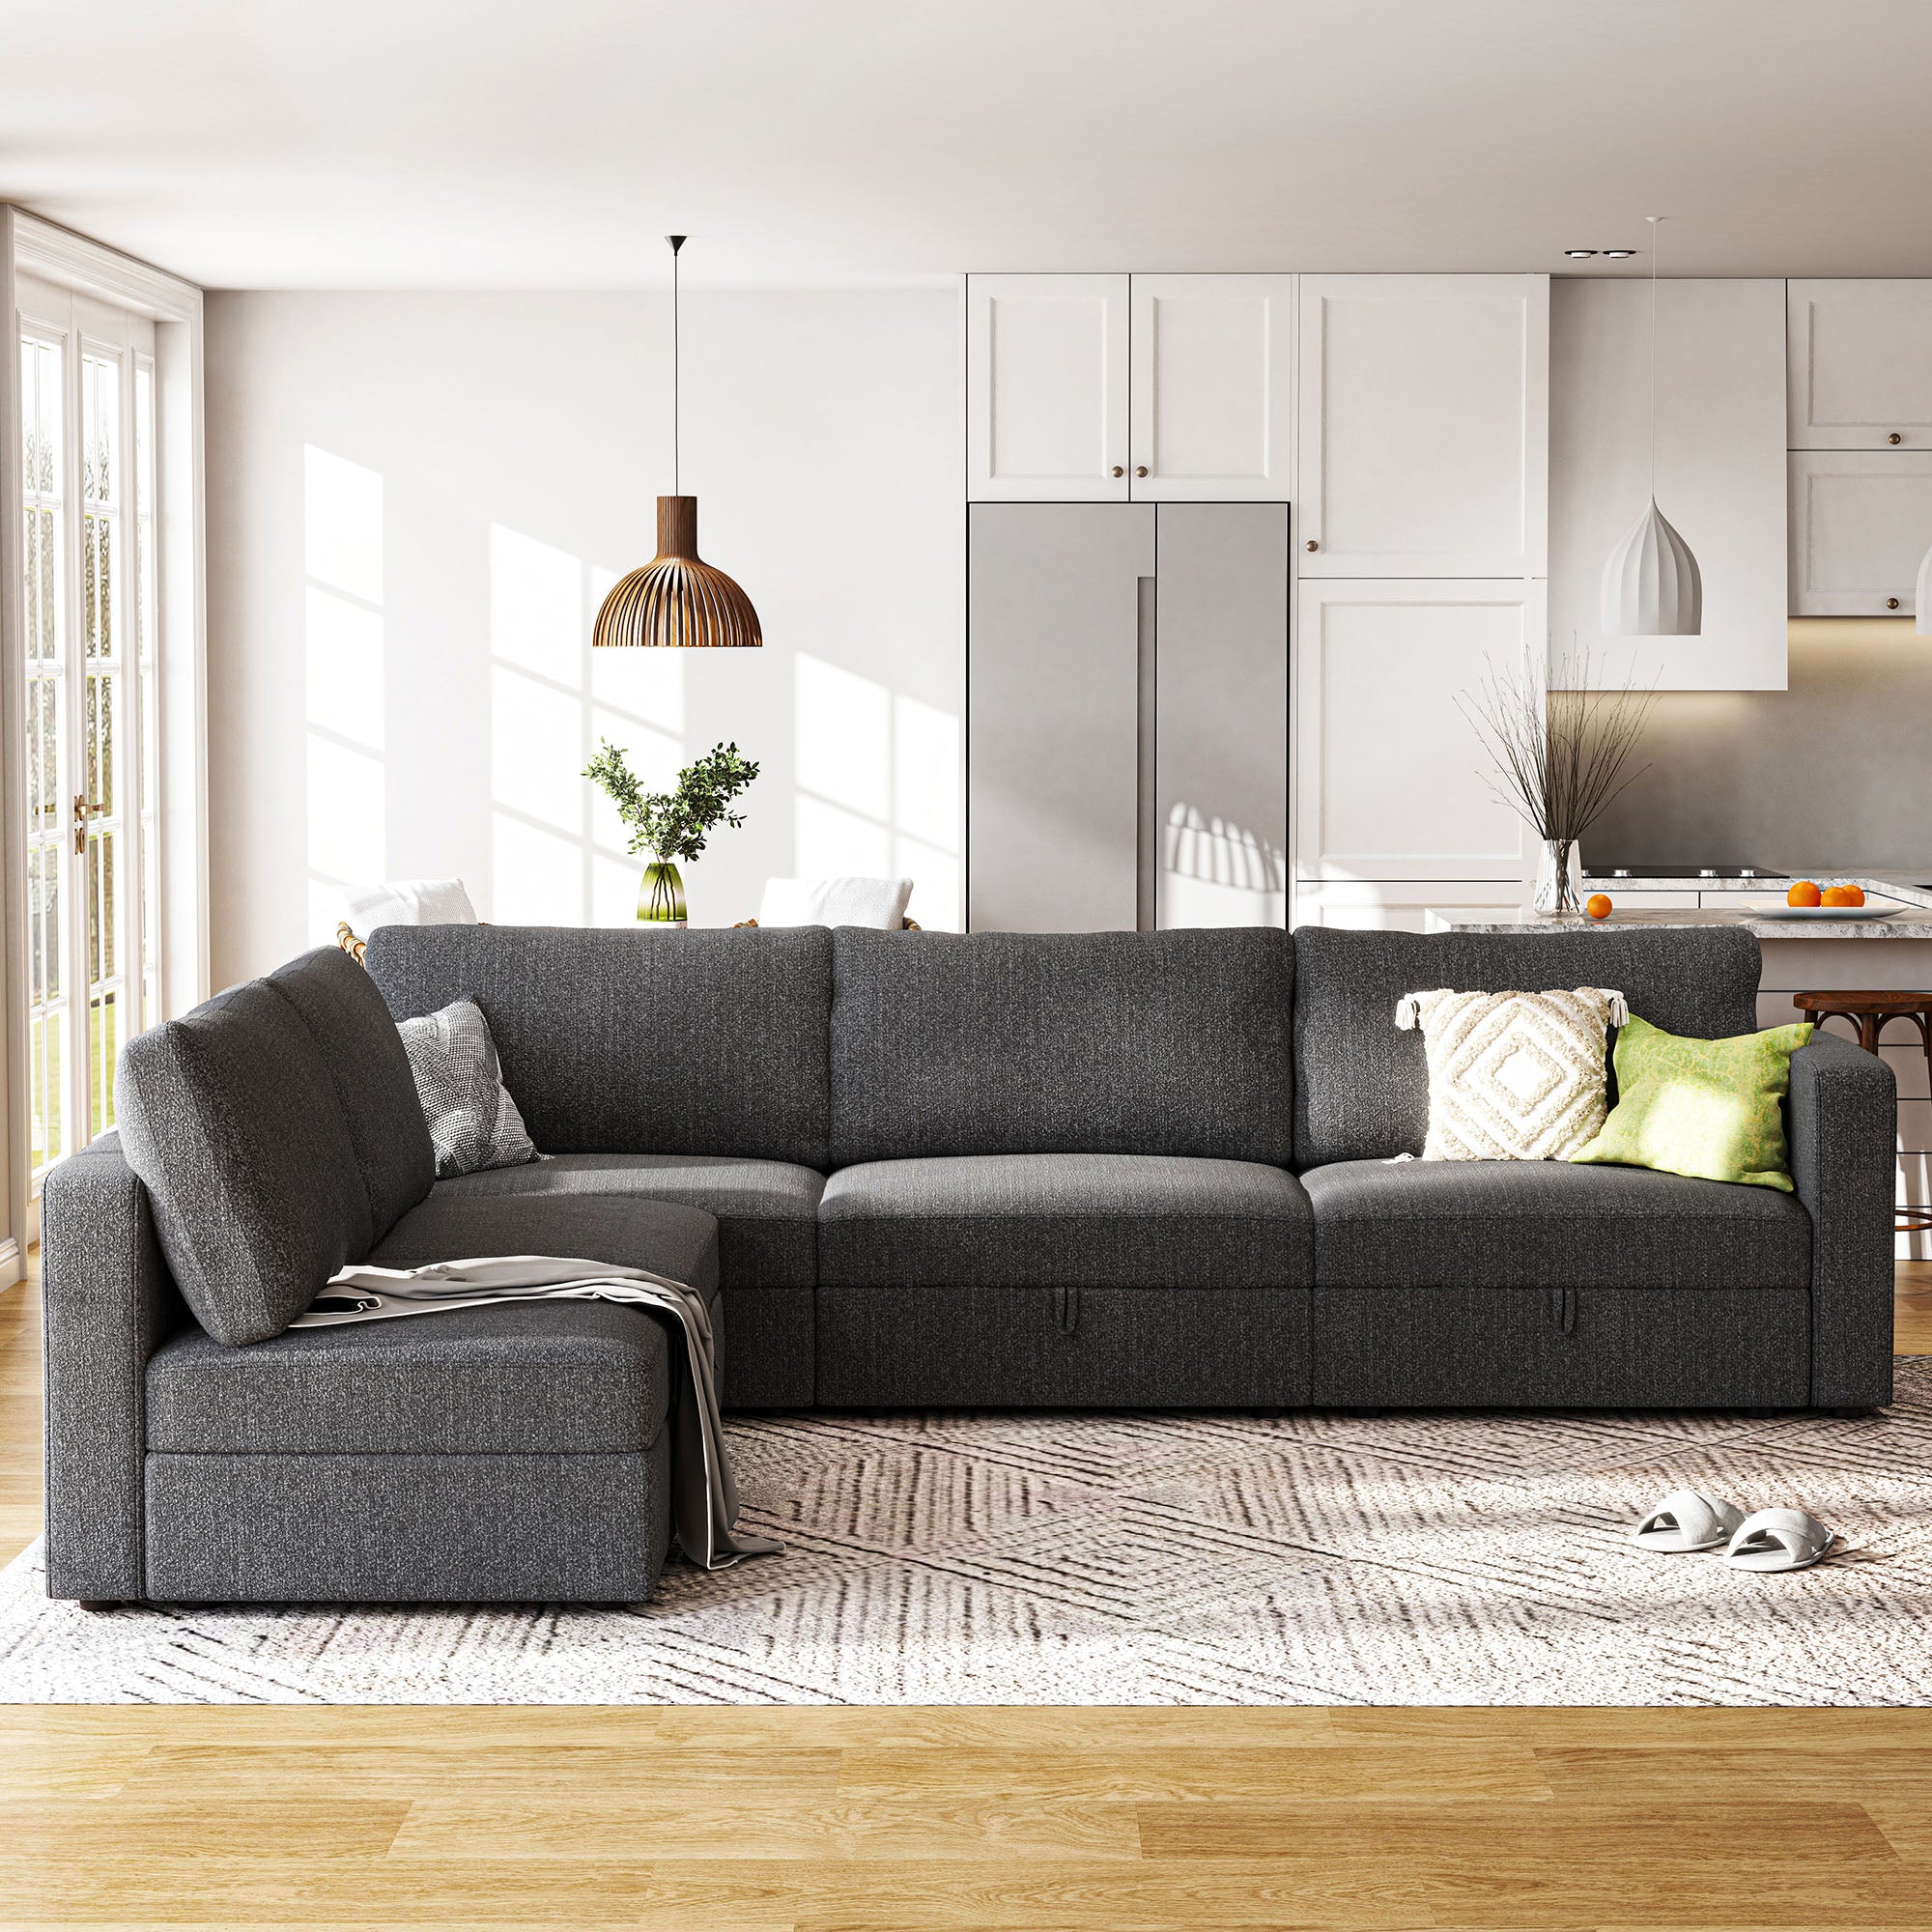 HONBAY Dark Grey Fabric Comfortable Widened Seat Modular Sectional Sofa for Living Room